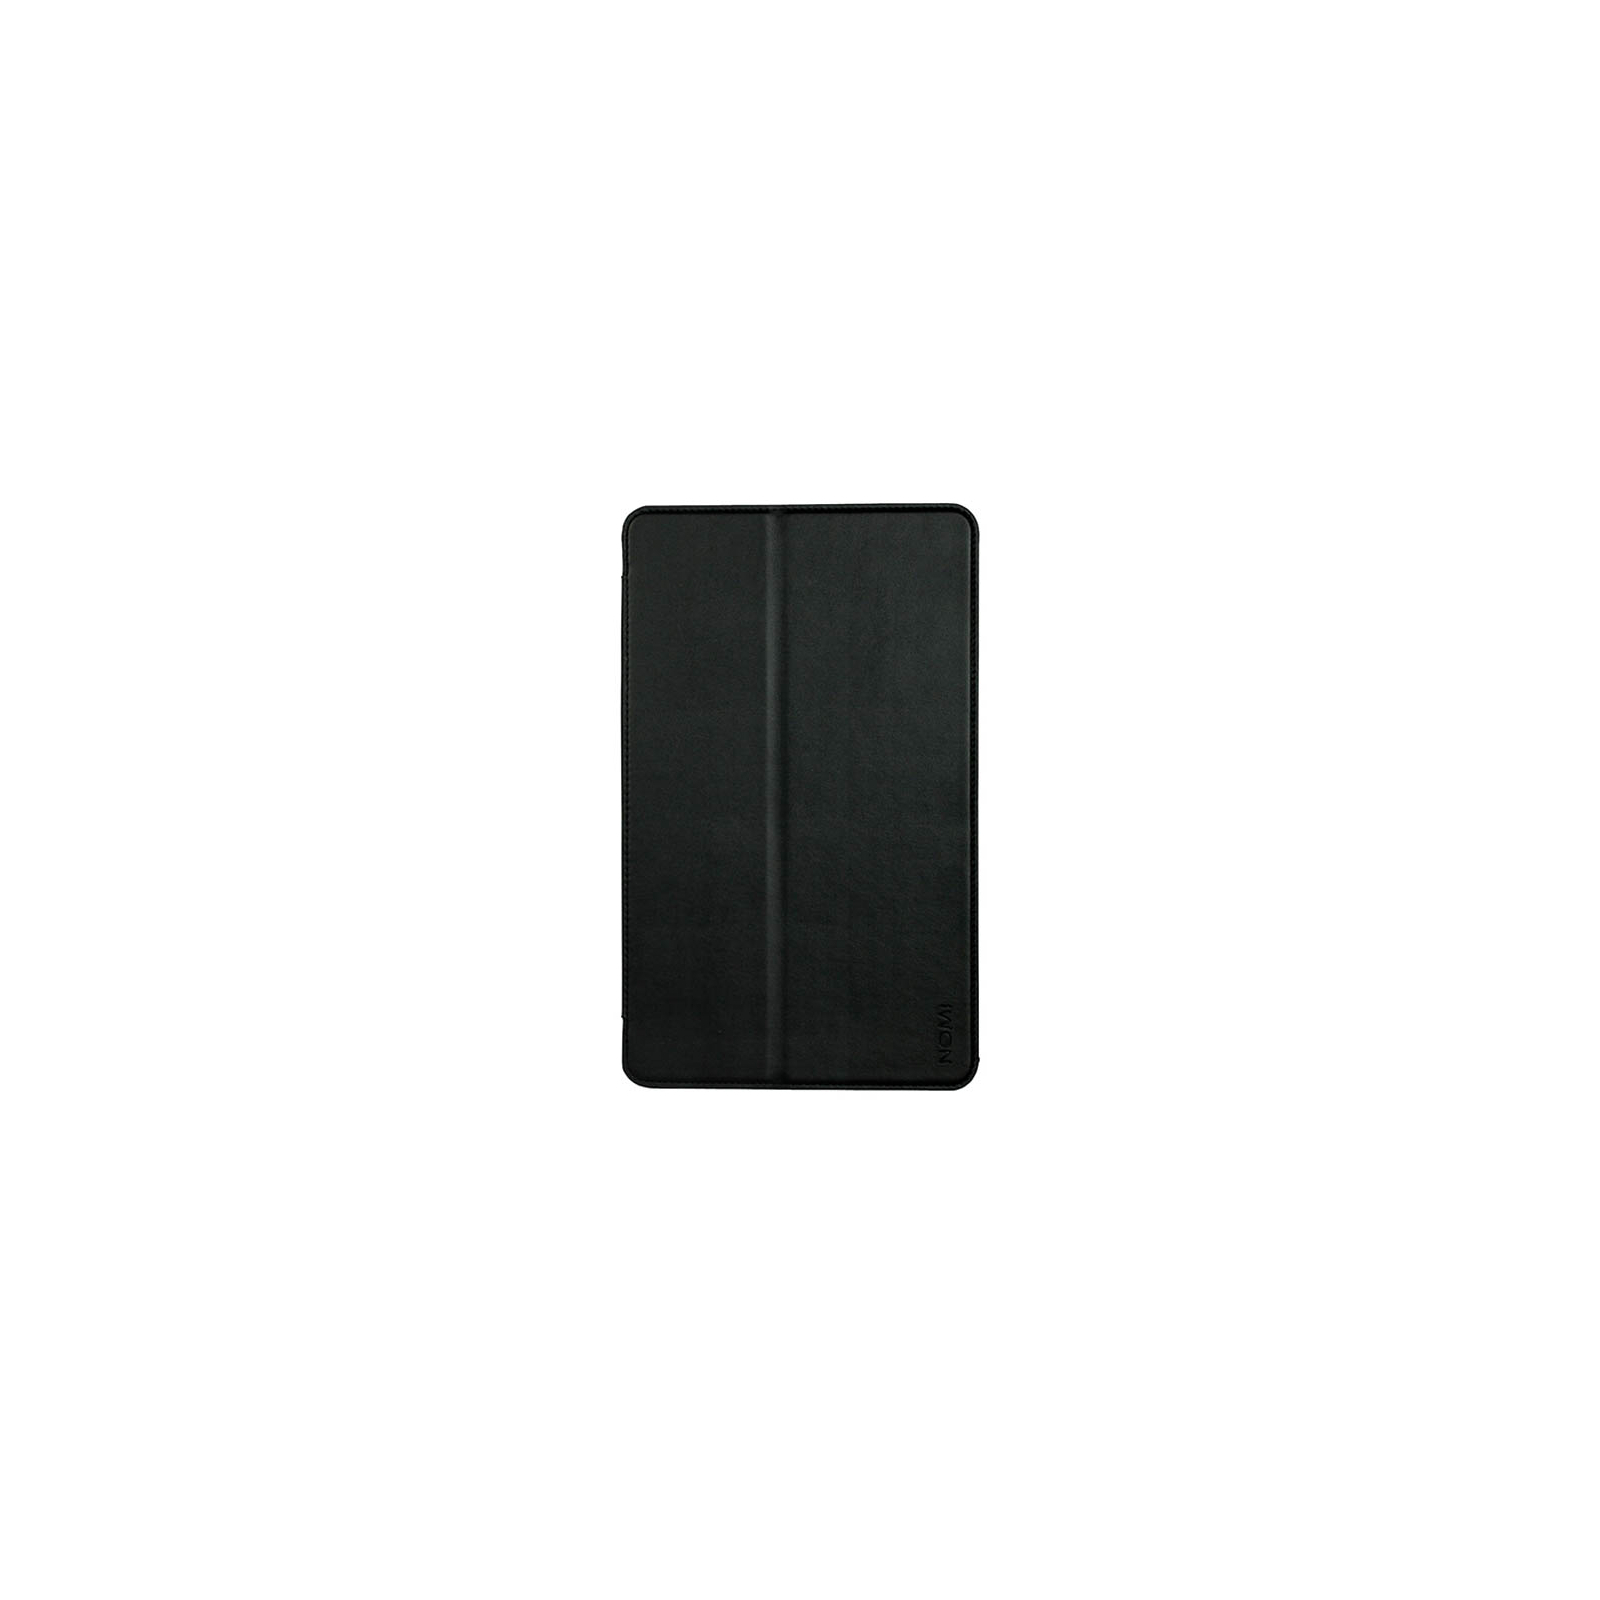 Чехол для планшета Nomi Slim PU case C10103 Black